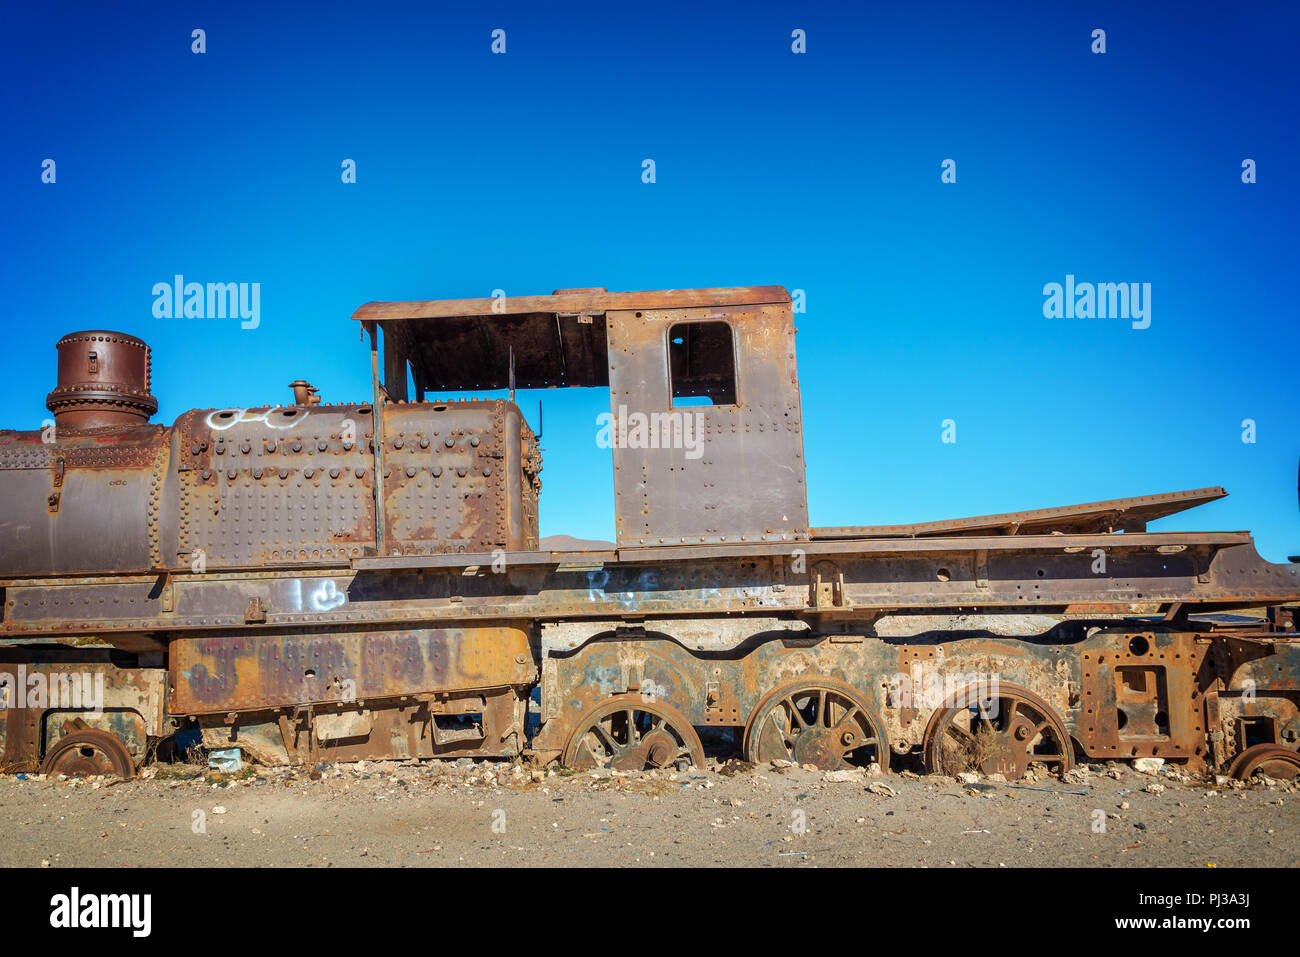 Old rusty locomotive abandoned in the train cemetery of Uyuni, Bolivia Stock Photo